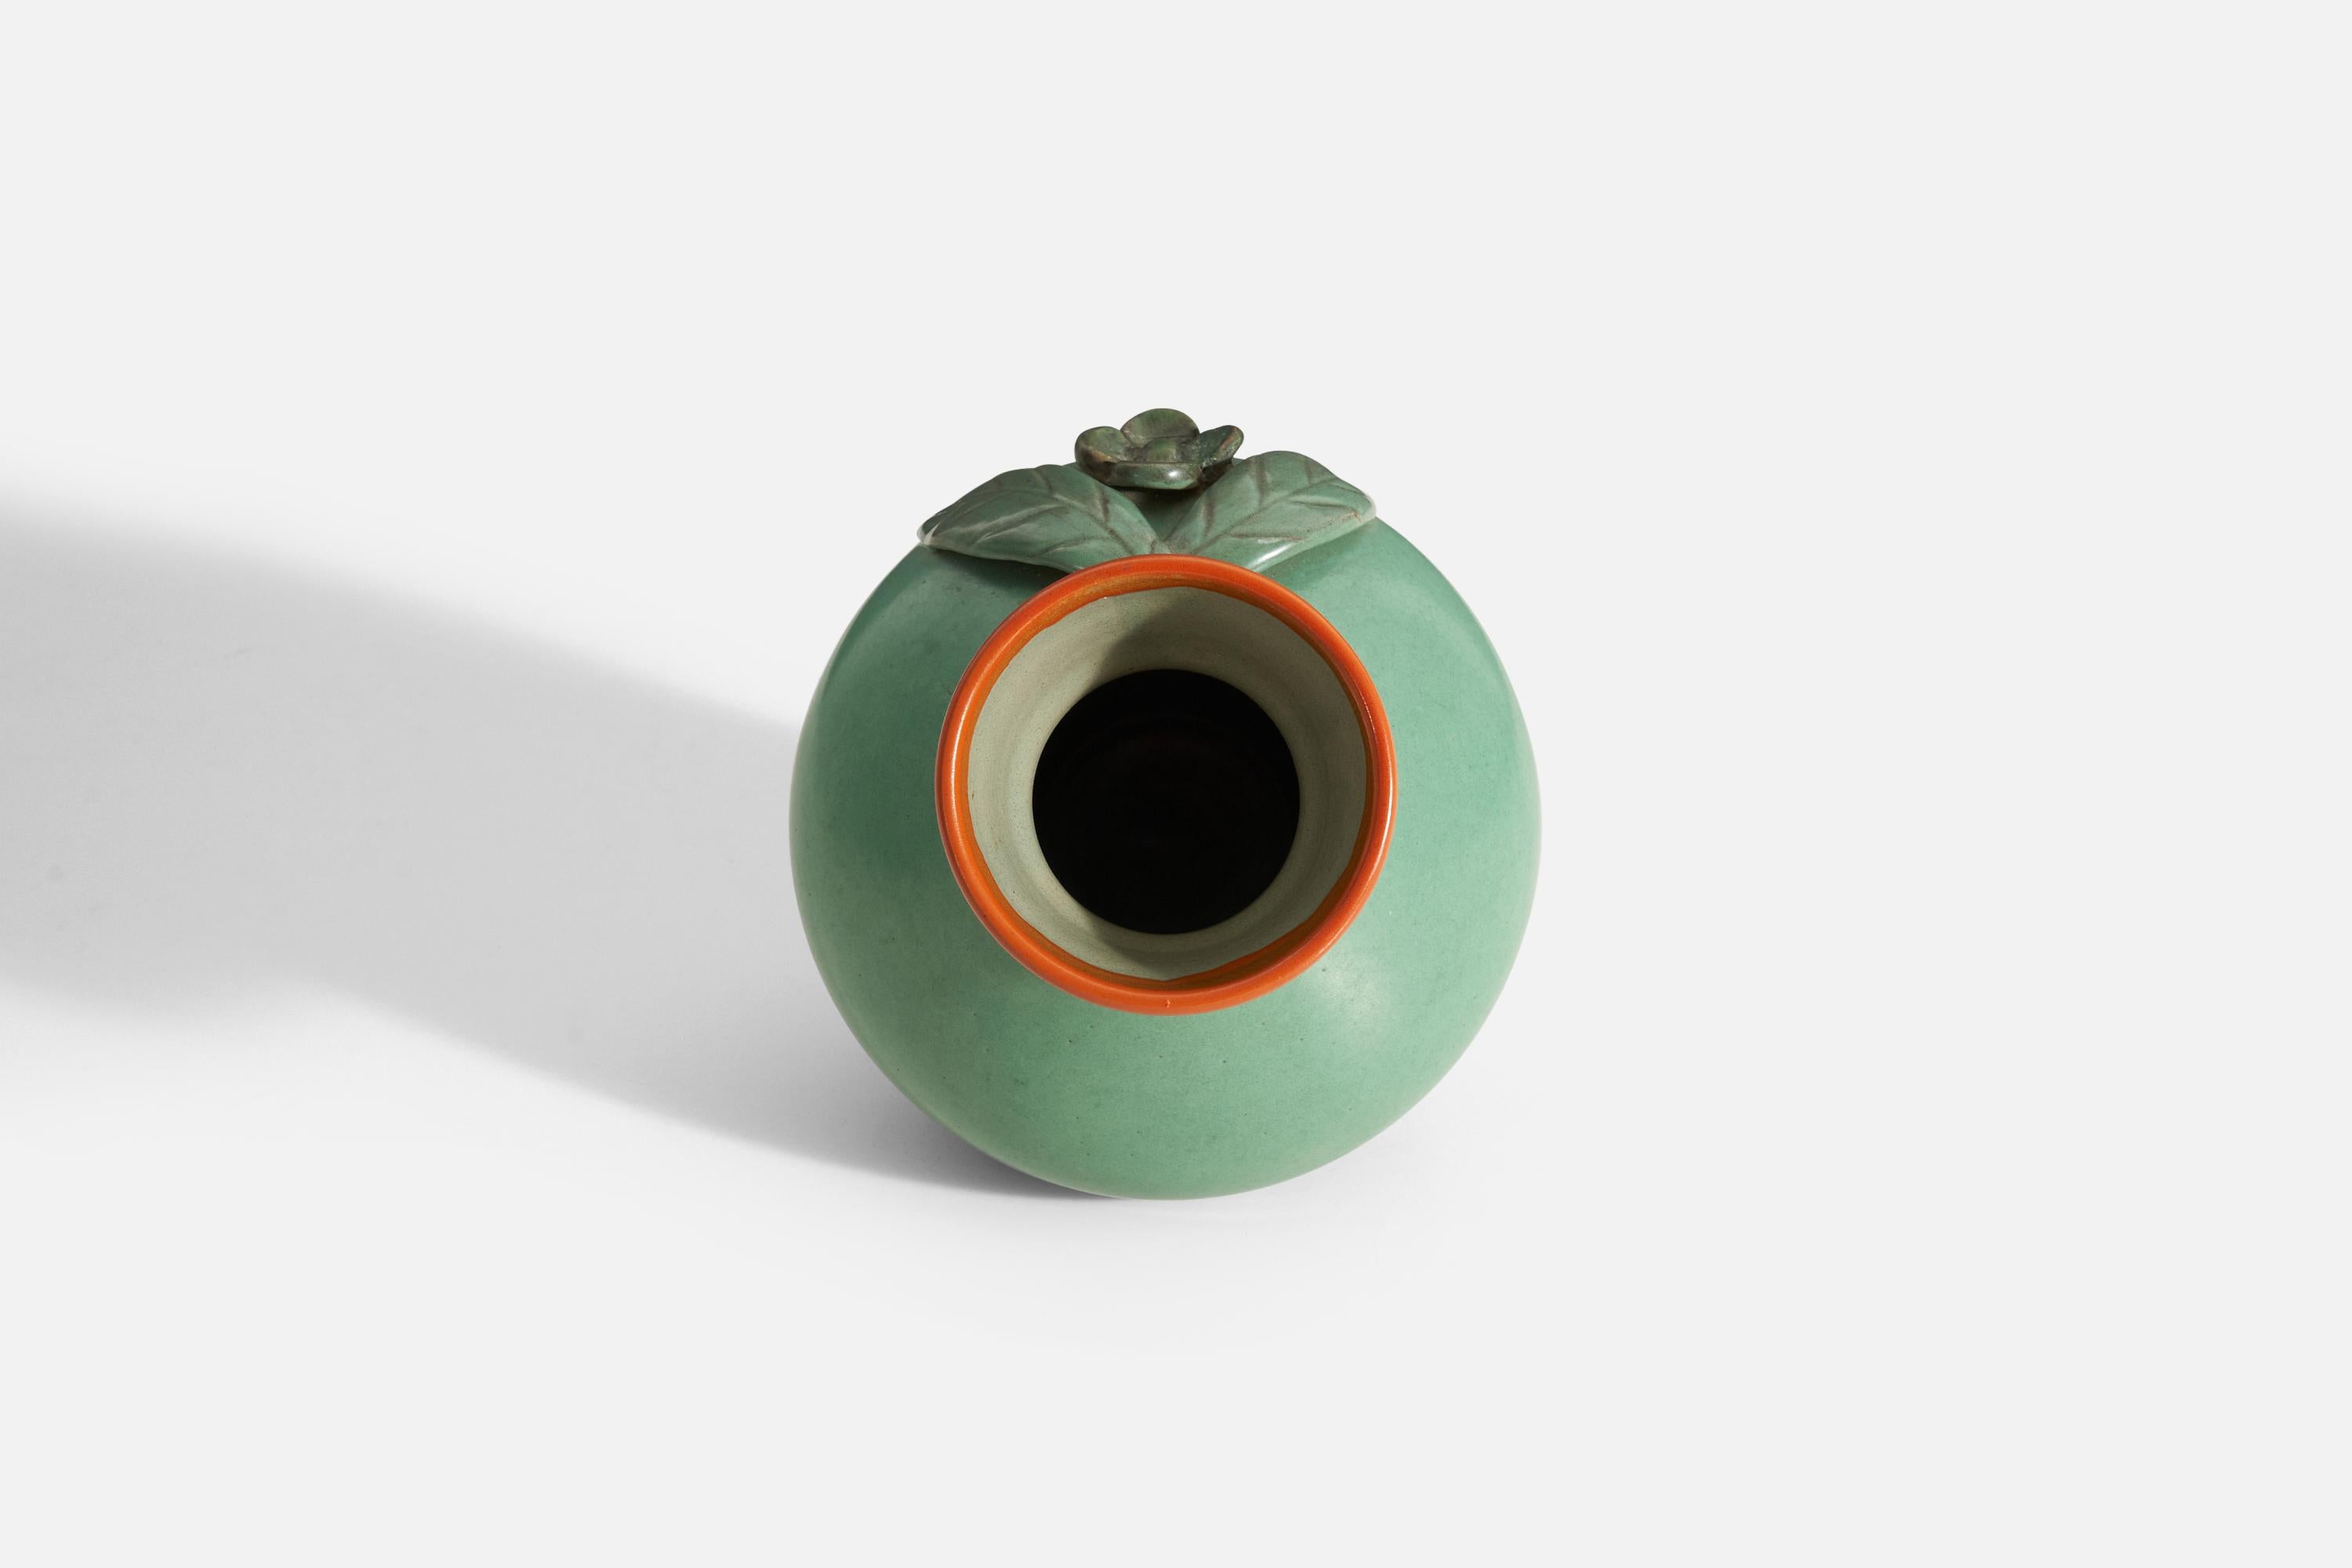 Scandinavian Modern Töreboda Keramik, Vase, Green and Orange-Glazed Earthenware, Sweden, 1940s For Sale